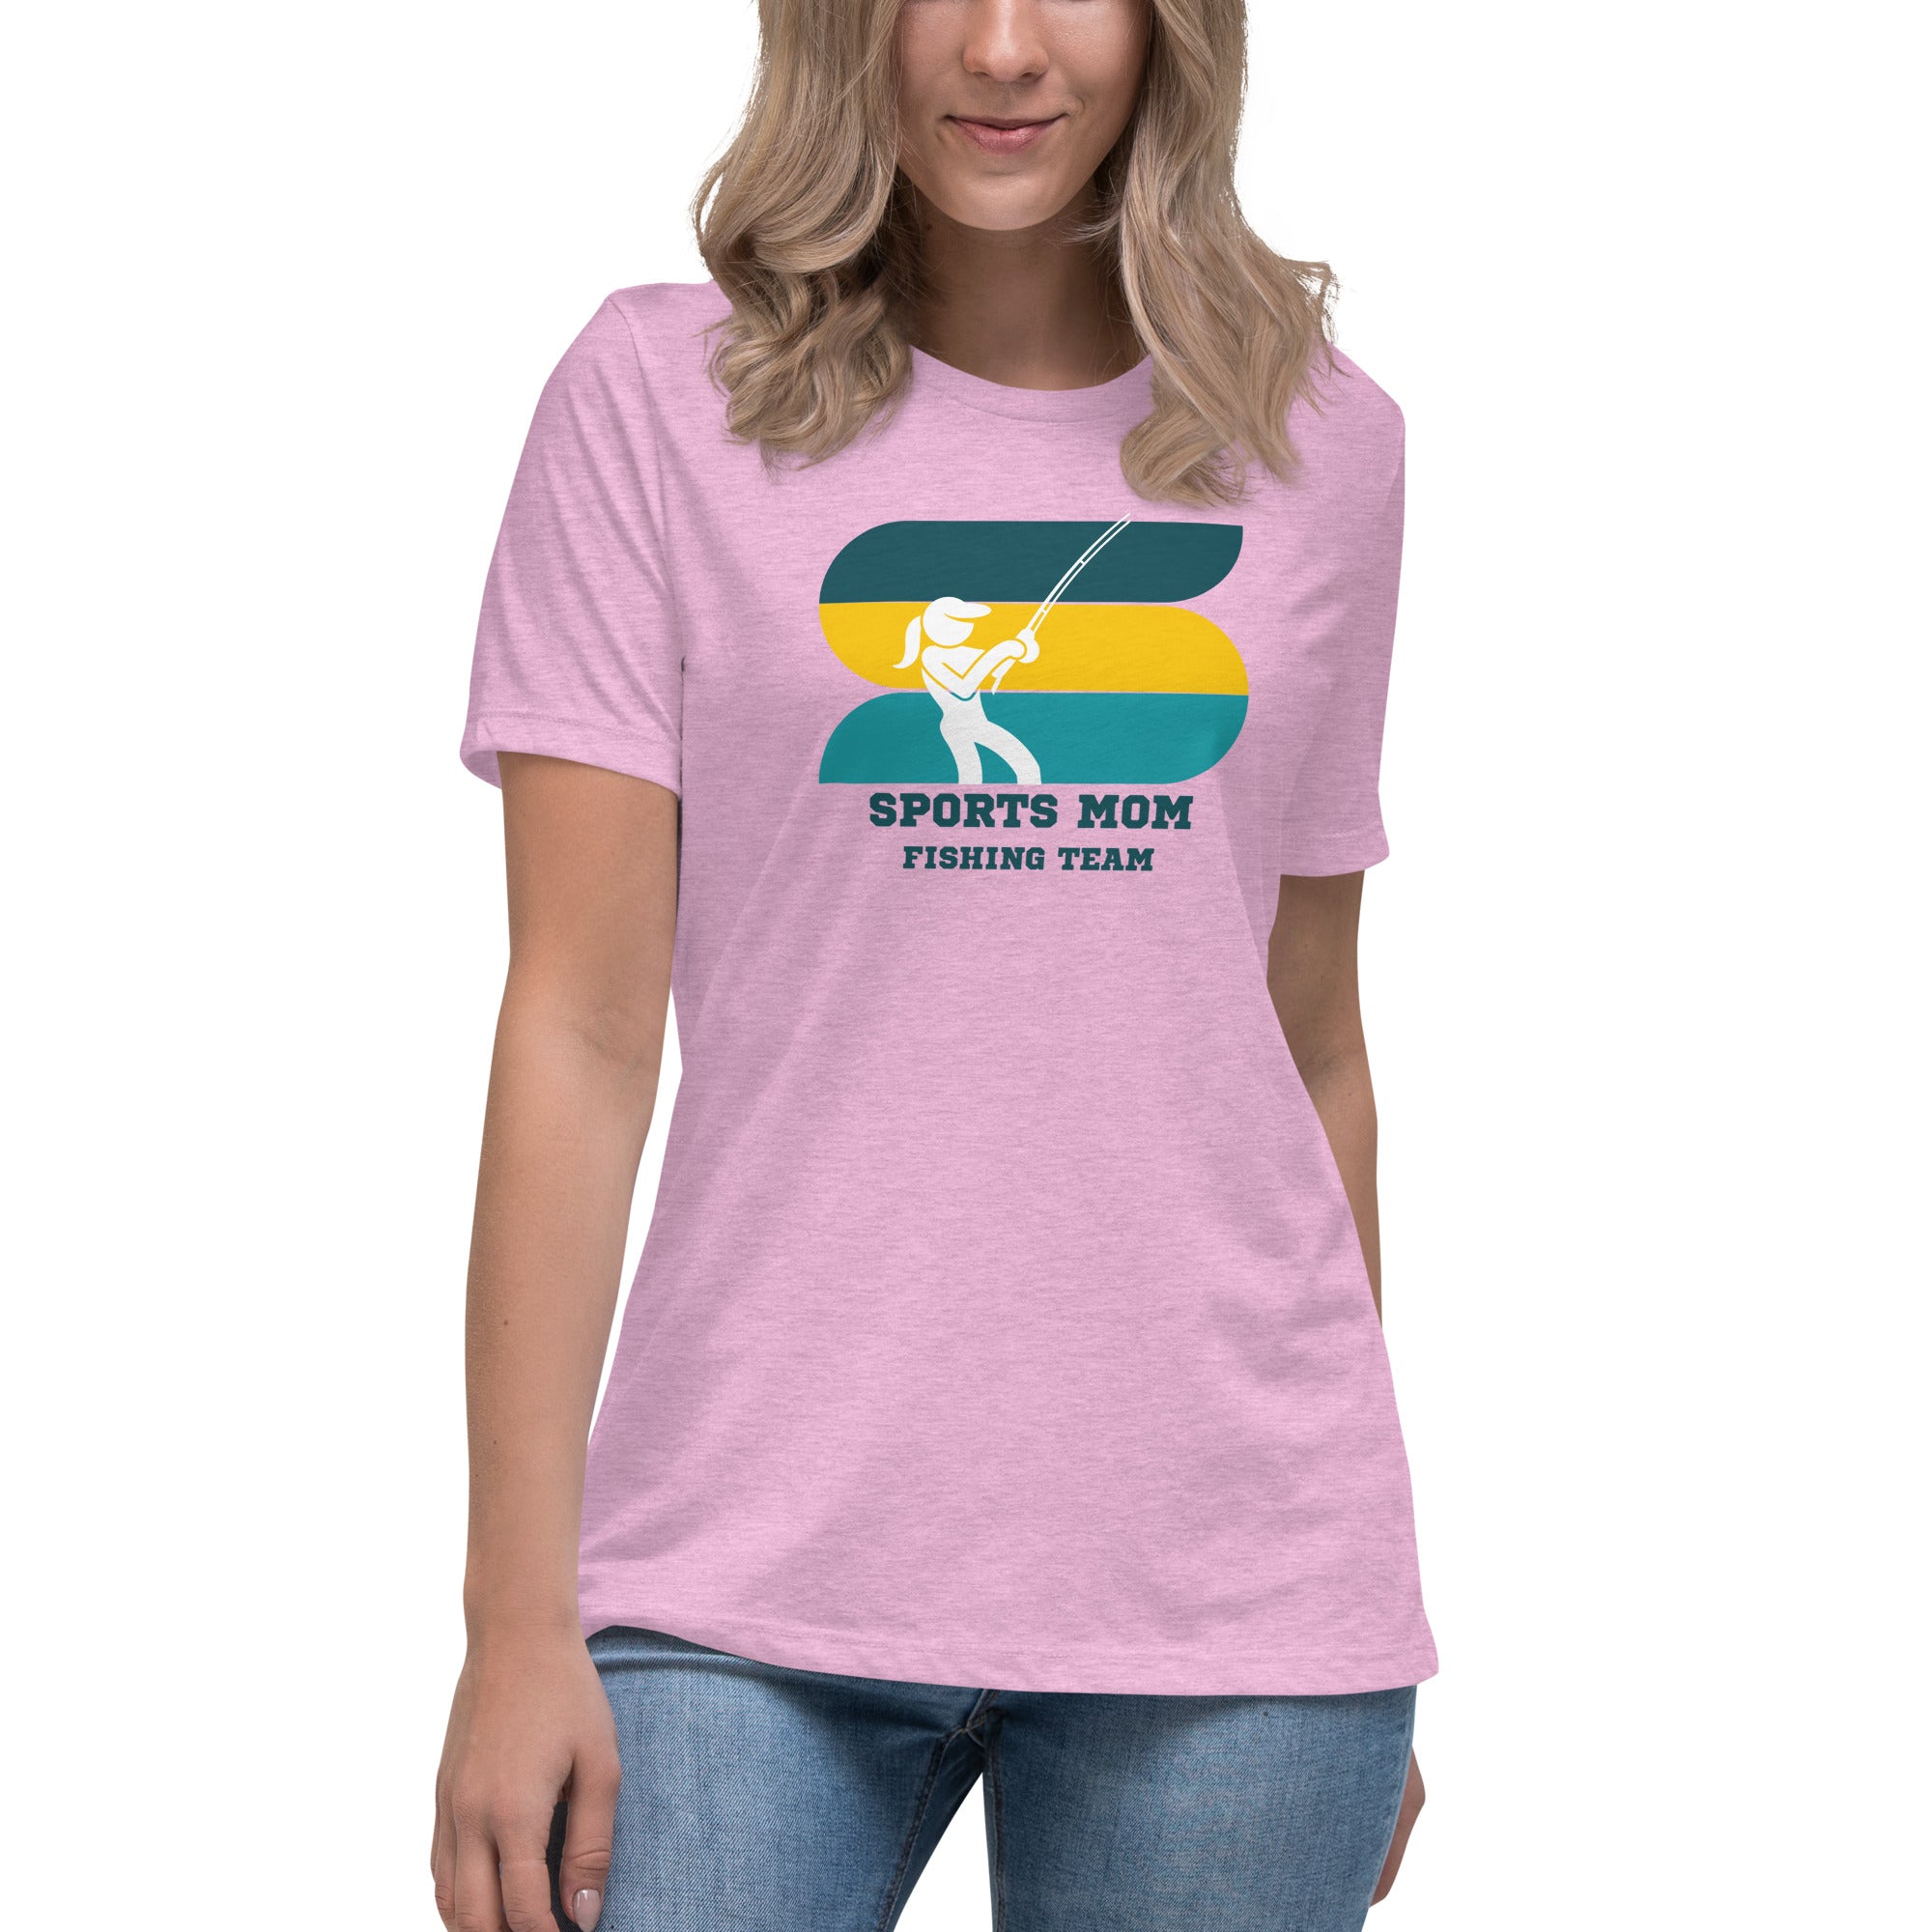 The Original Sports Mom Fishing Team Women's Premium T-Shirt